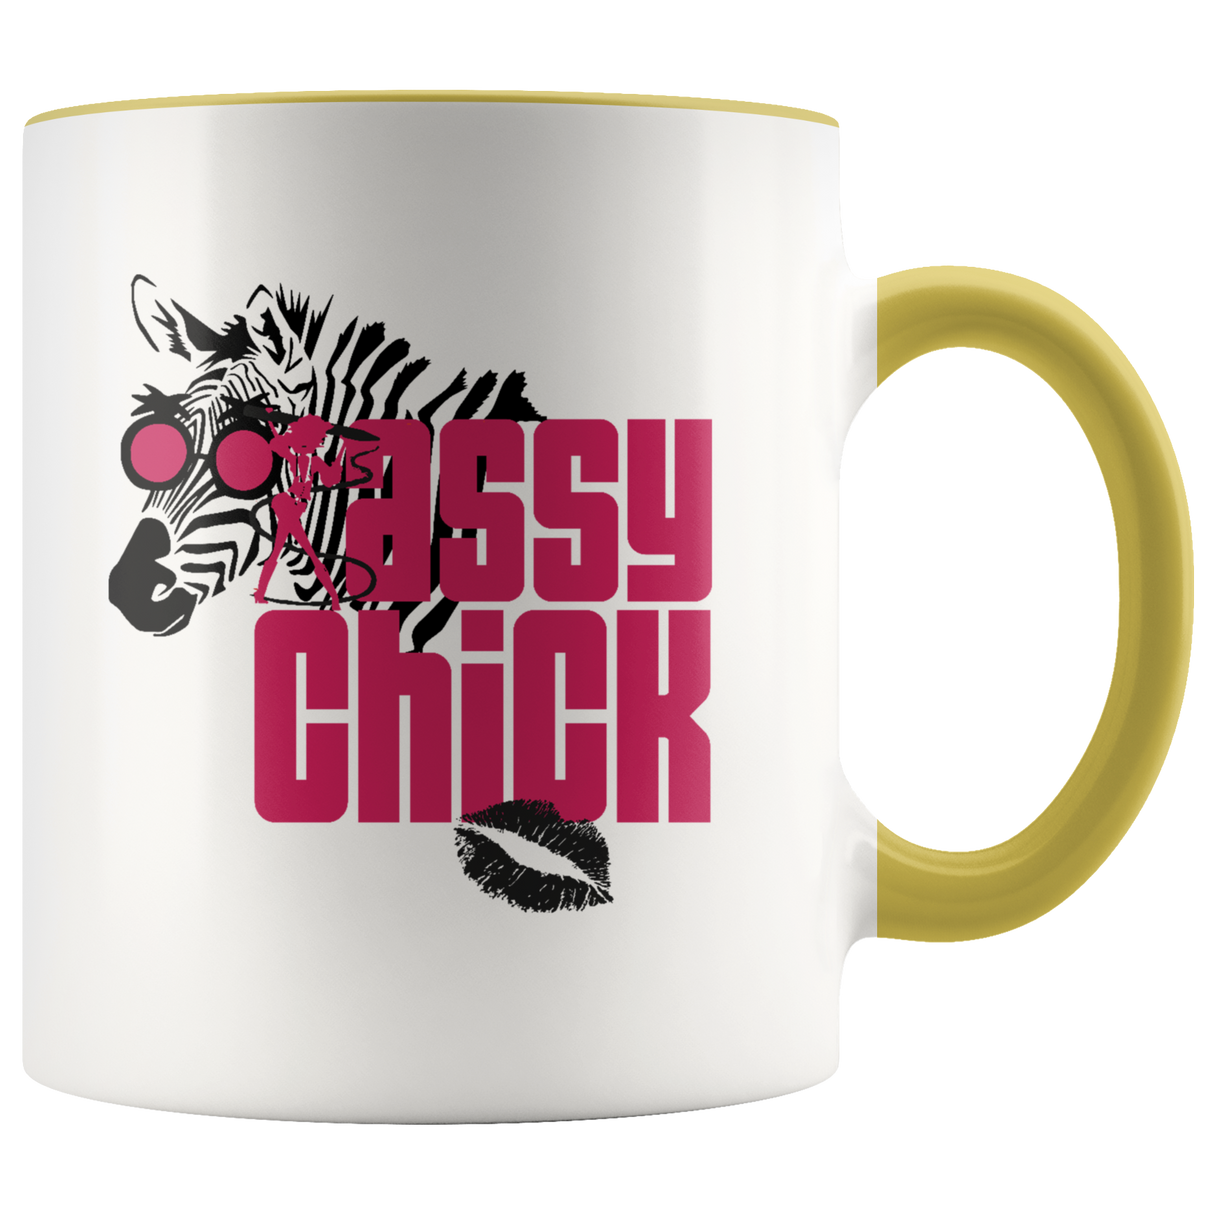 Sassy Chick Zebra Accent Ceramic Coffee Mug - Yellow | Shop Sassy Chick